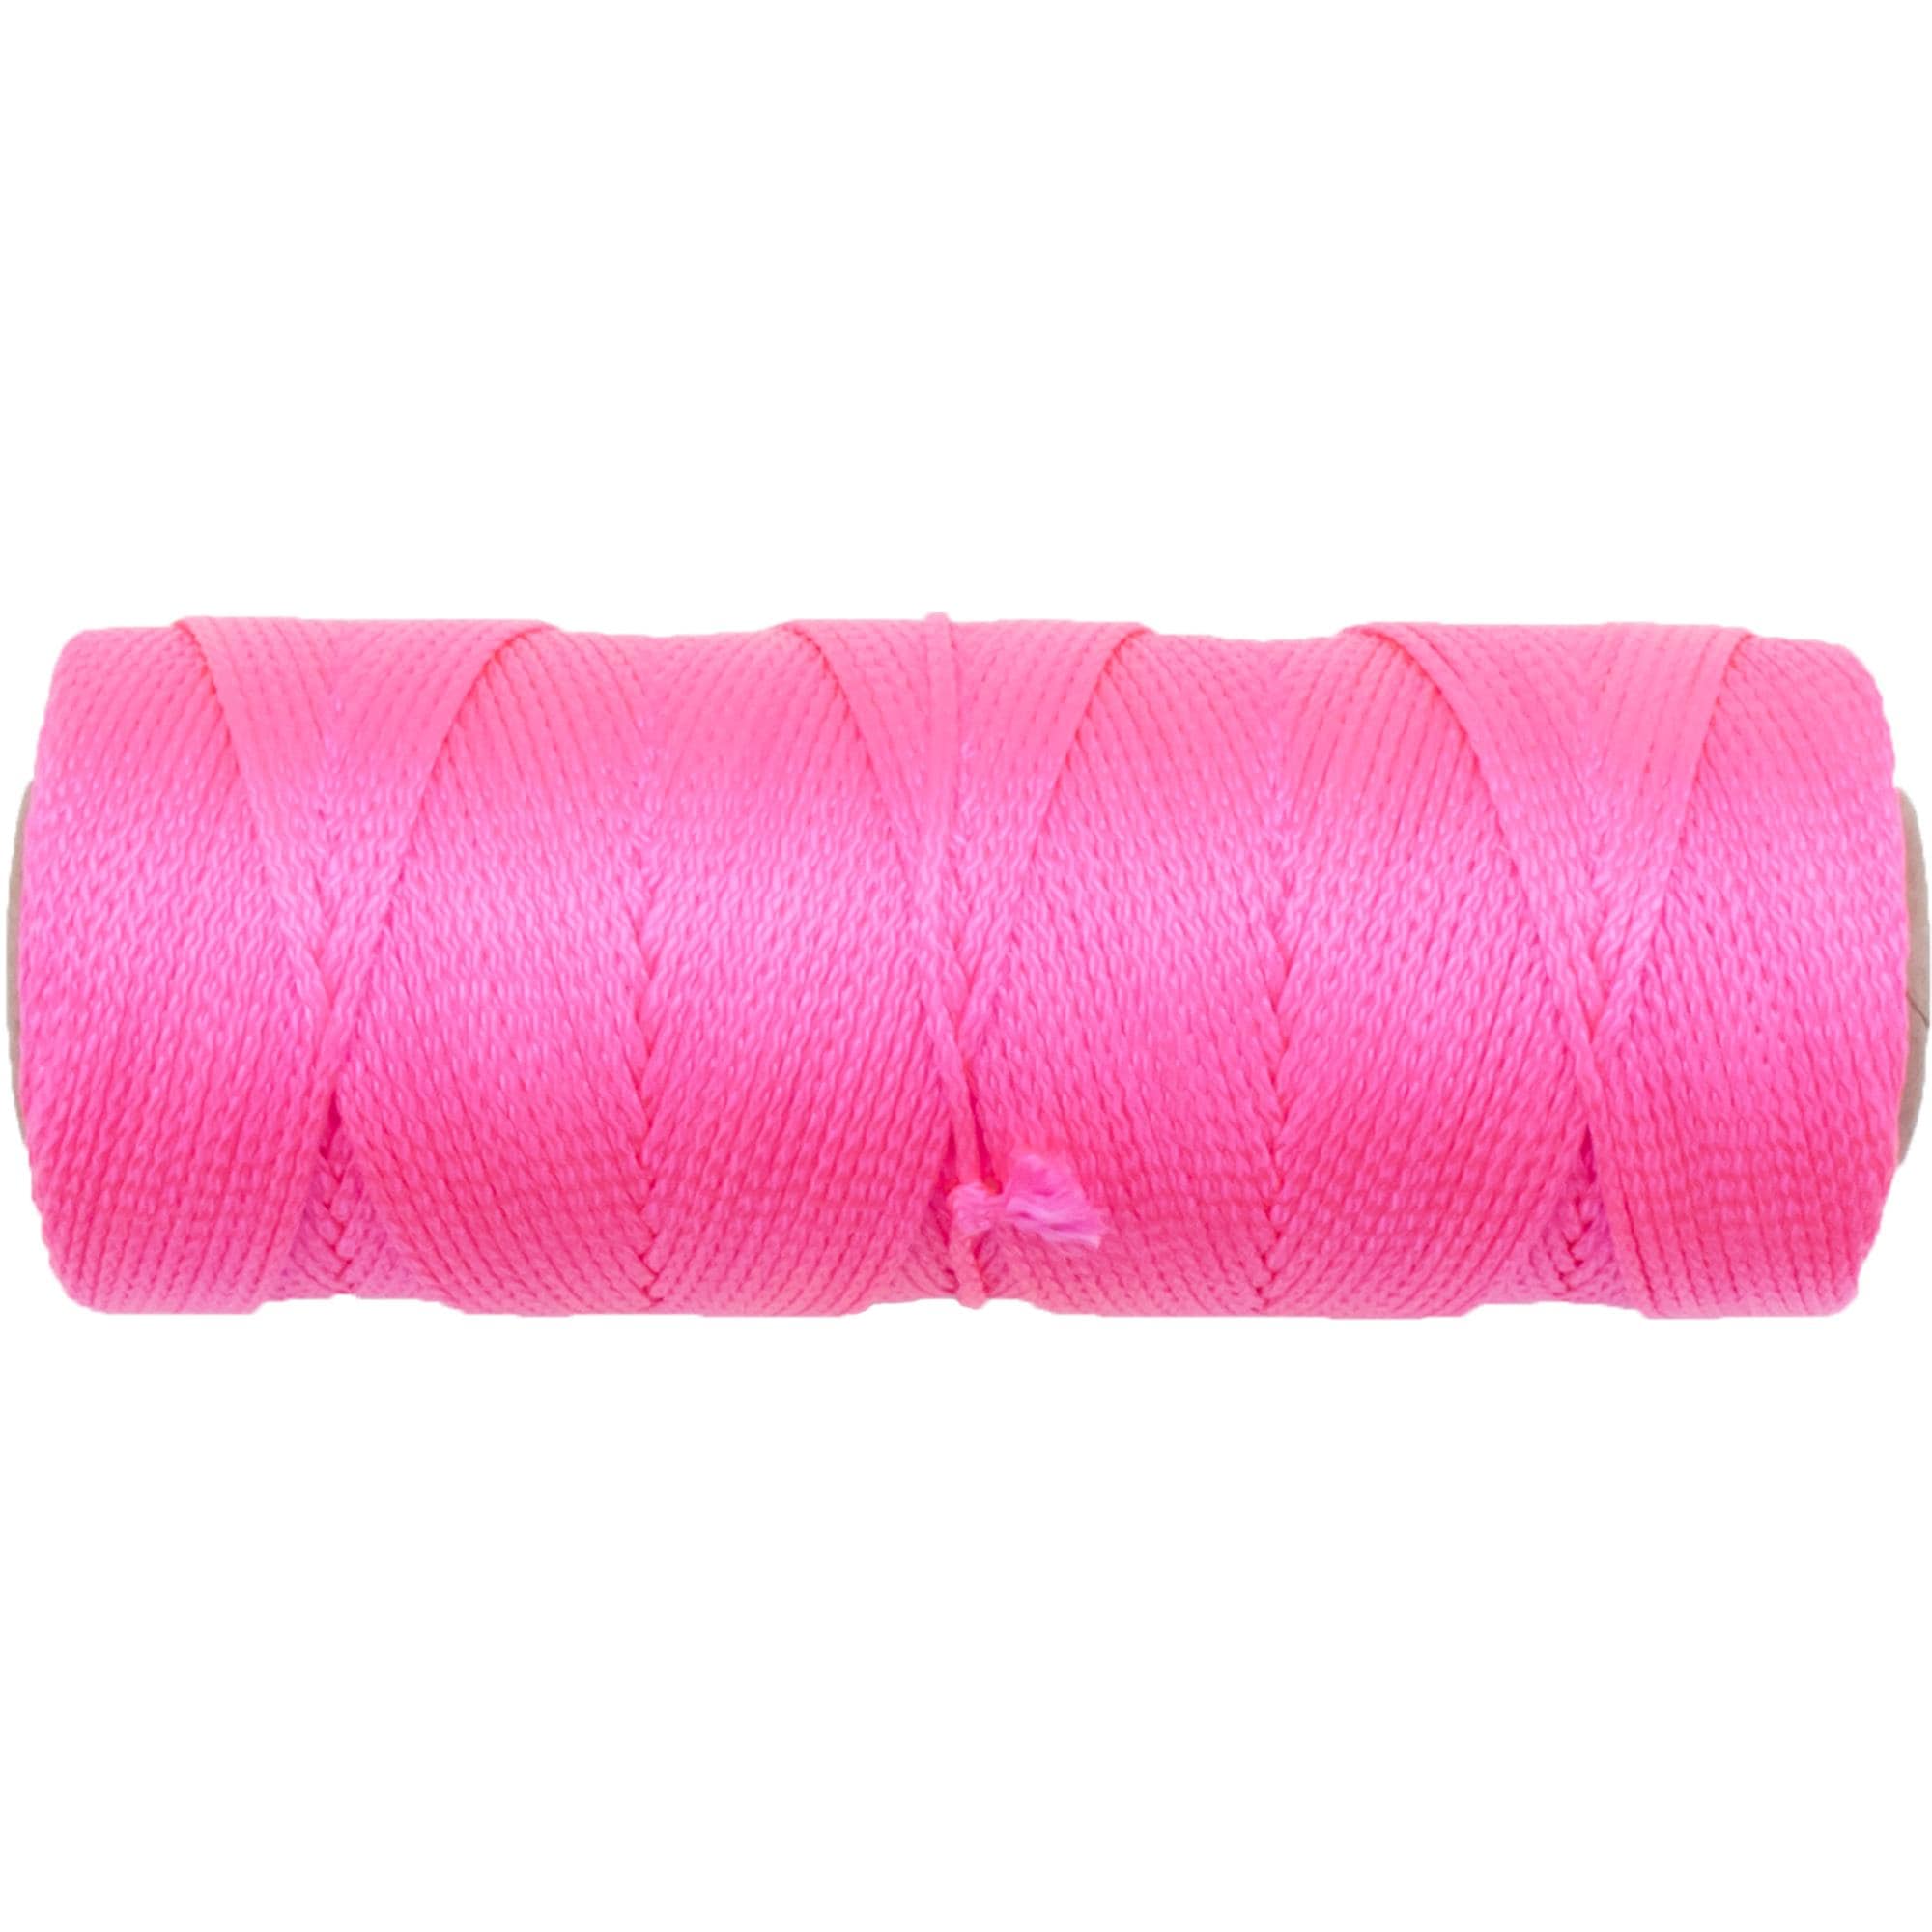 48X3/16" NYL-NP Twine Flat Cord #48 Neon Pink